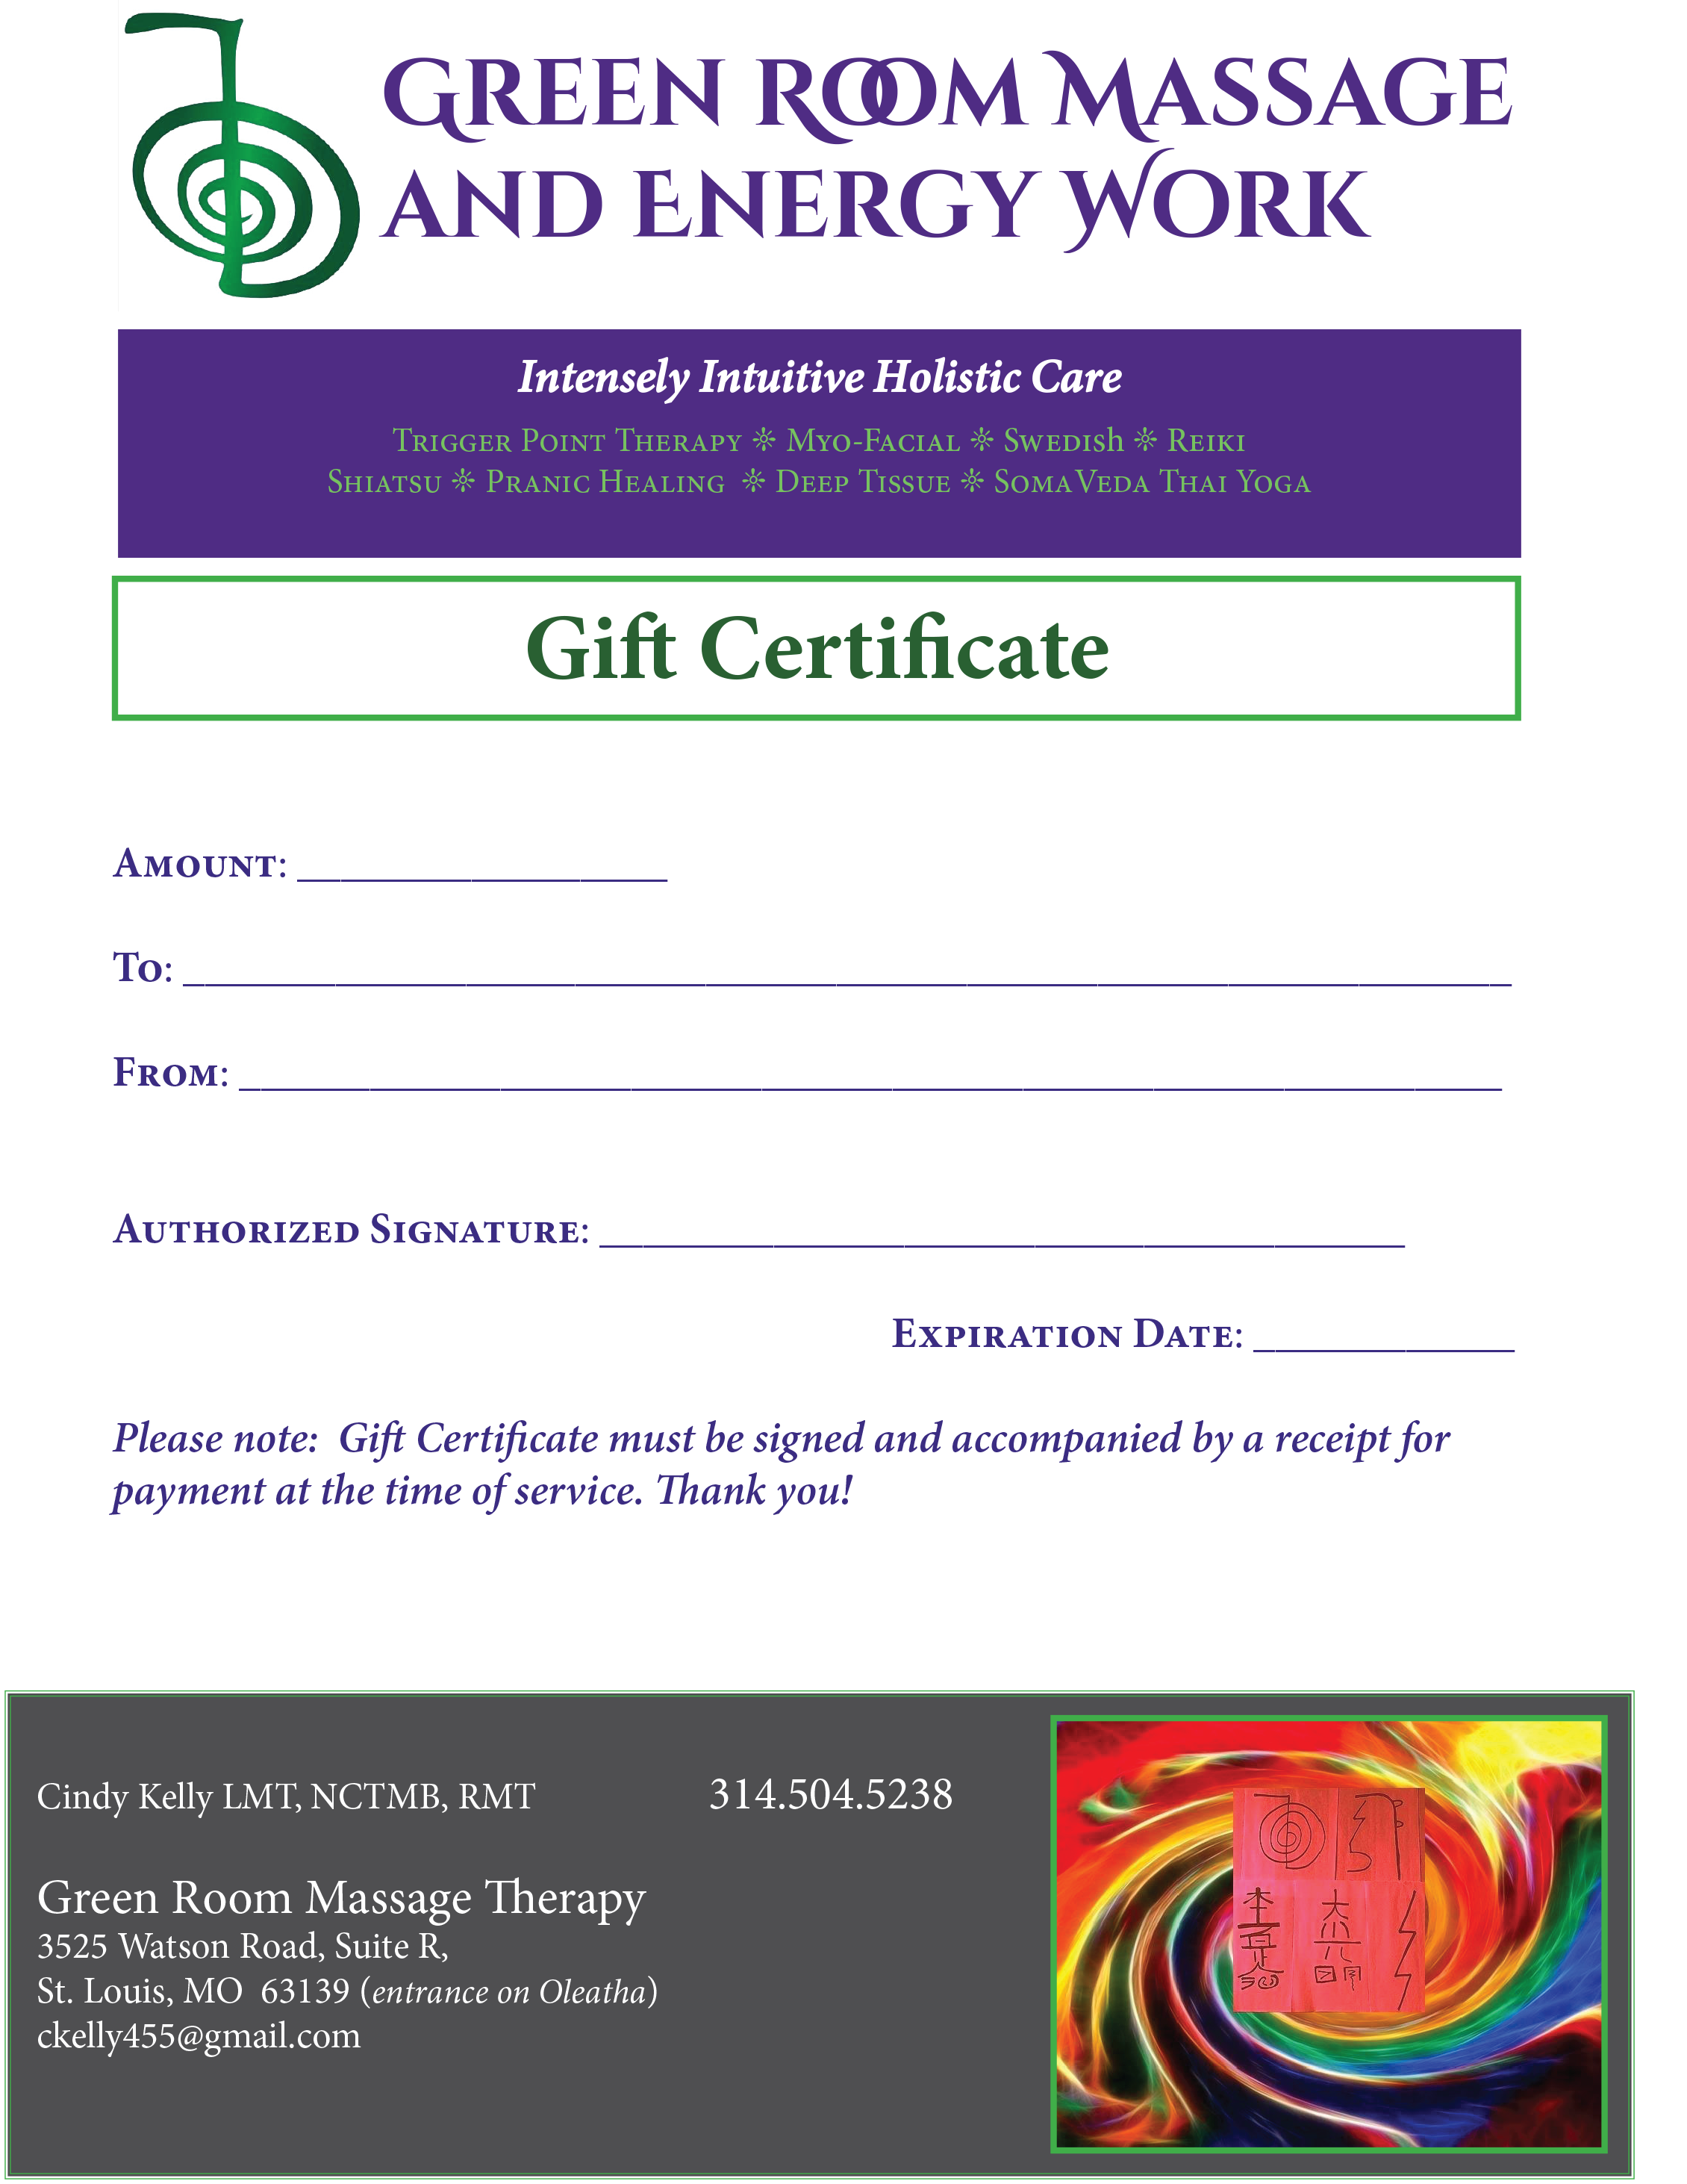 http://greenroom-massage.com/wp-content/uploads/2018/12/Gift-Certificate.png